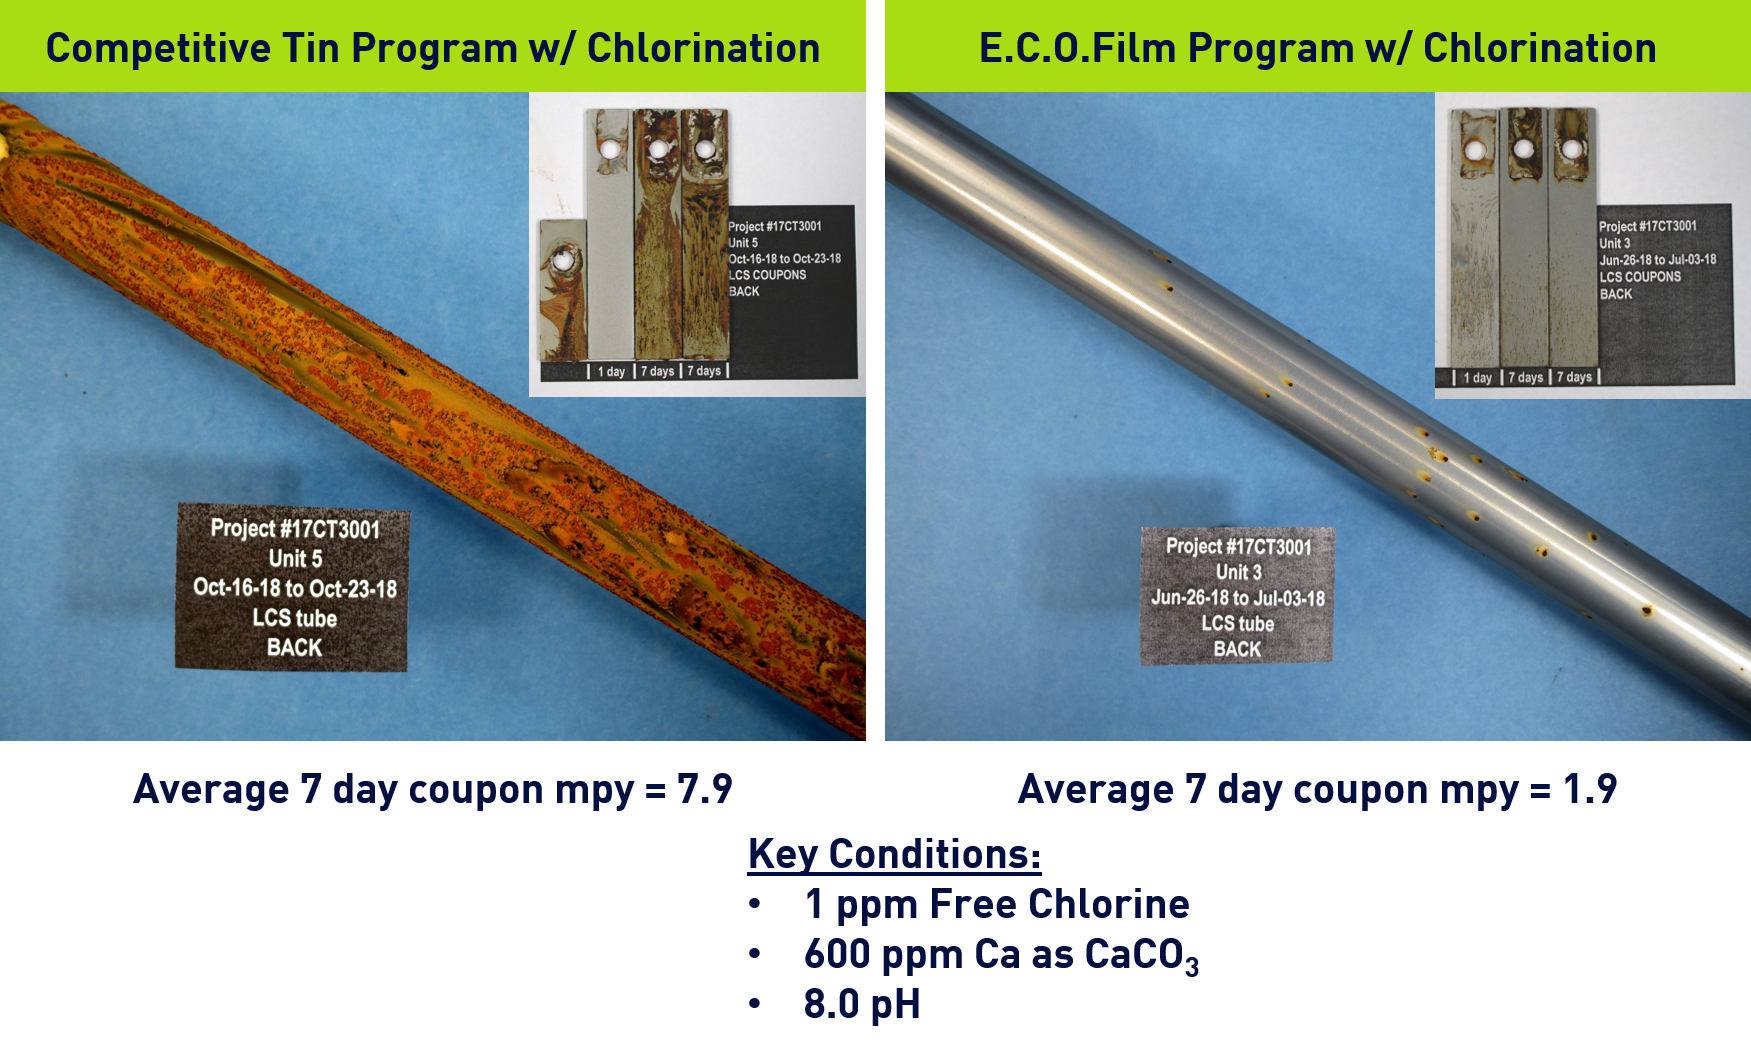 E.C.O.Film vs. programa anticorrosión competitivo